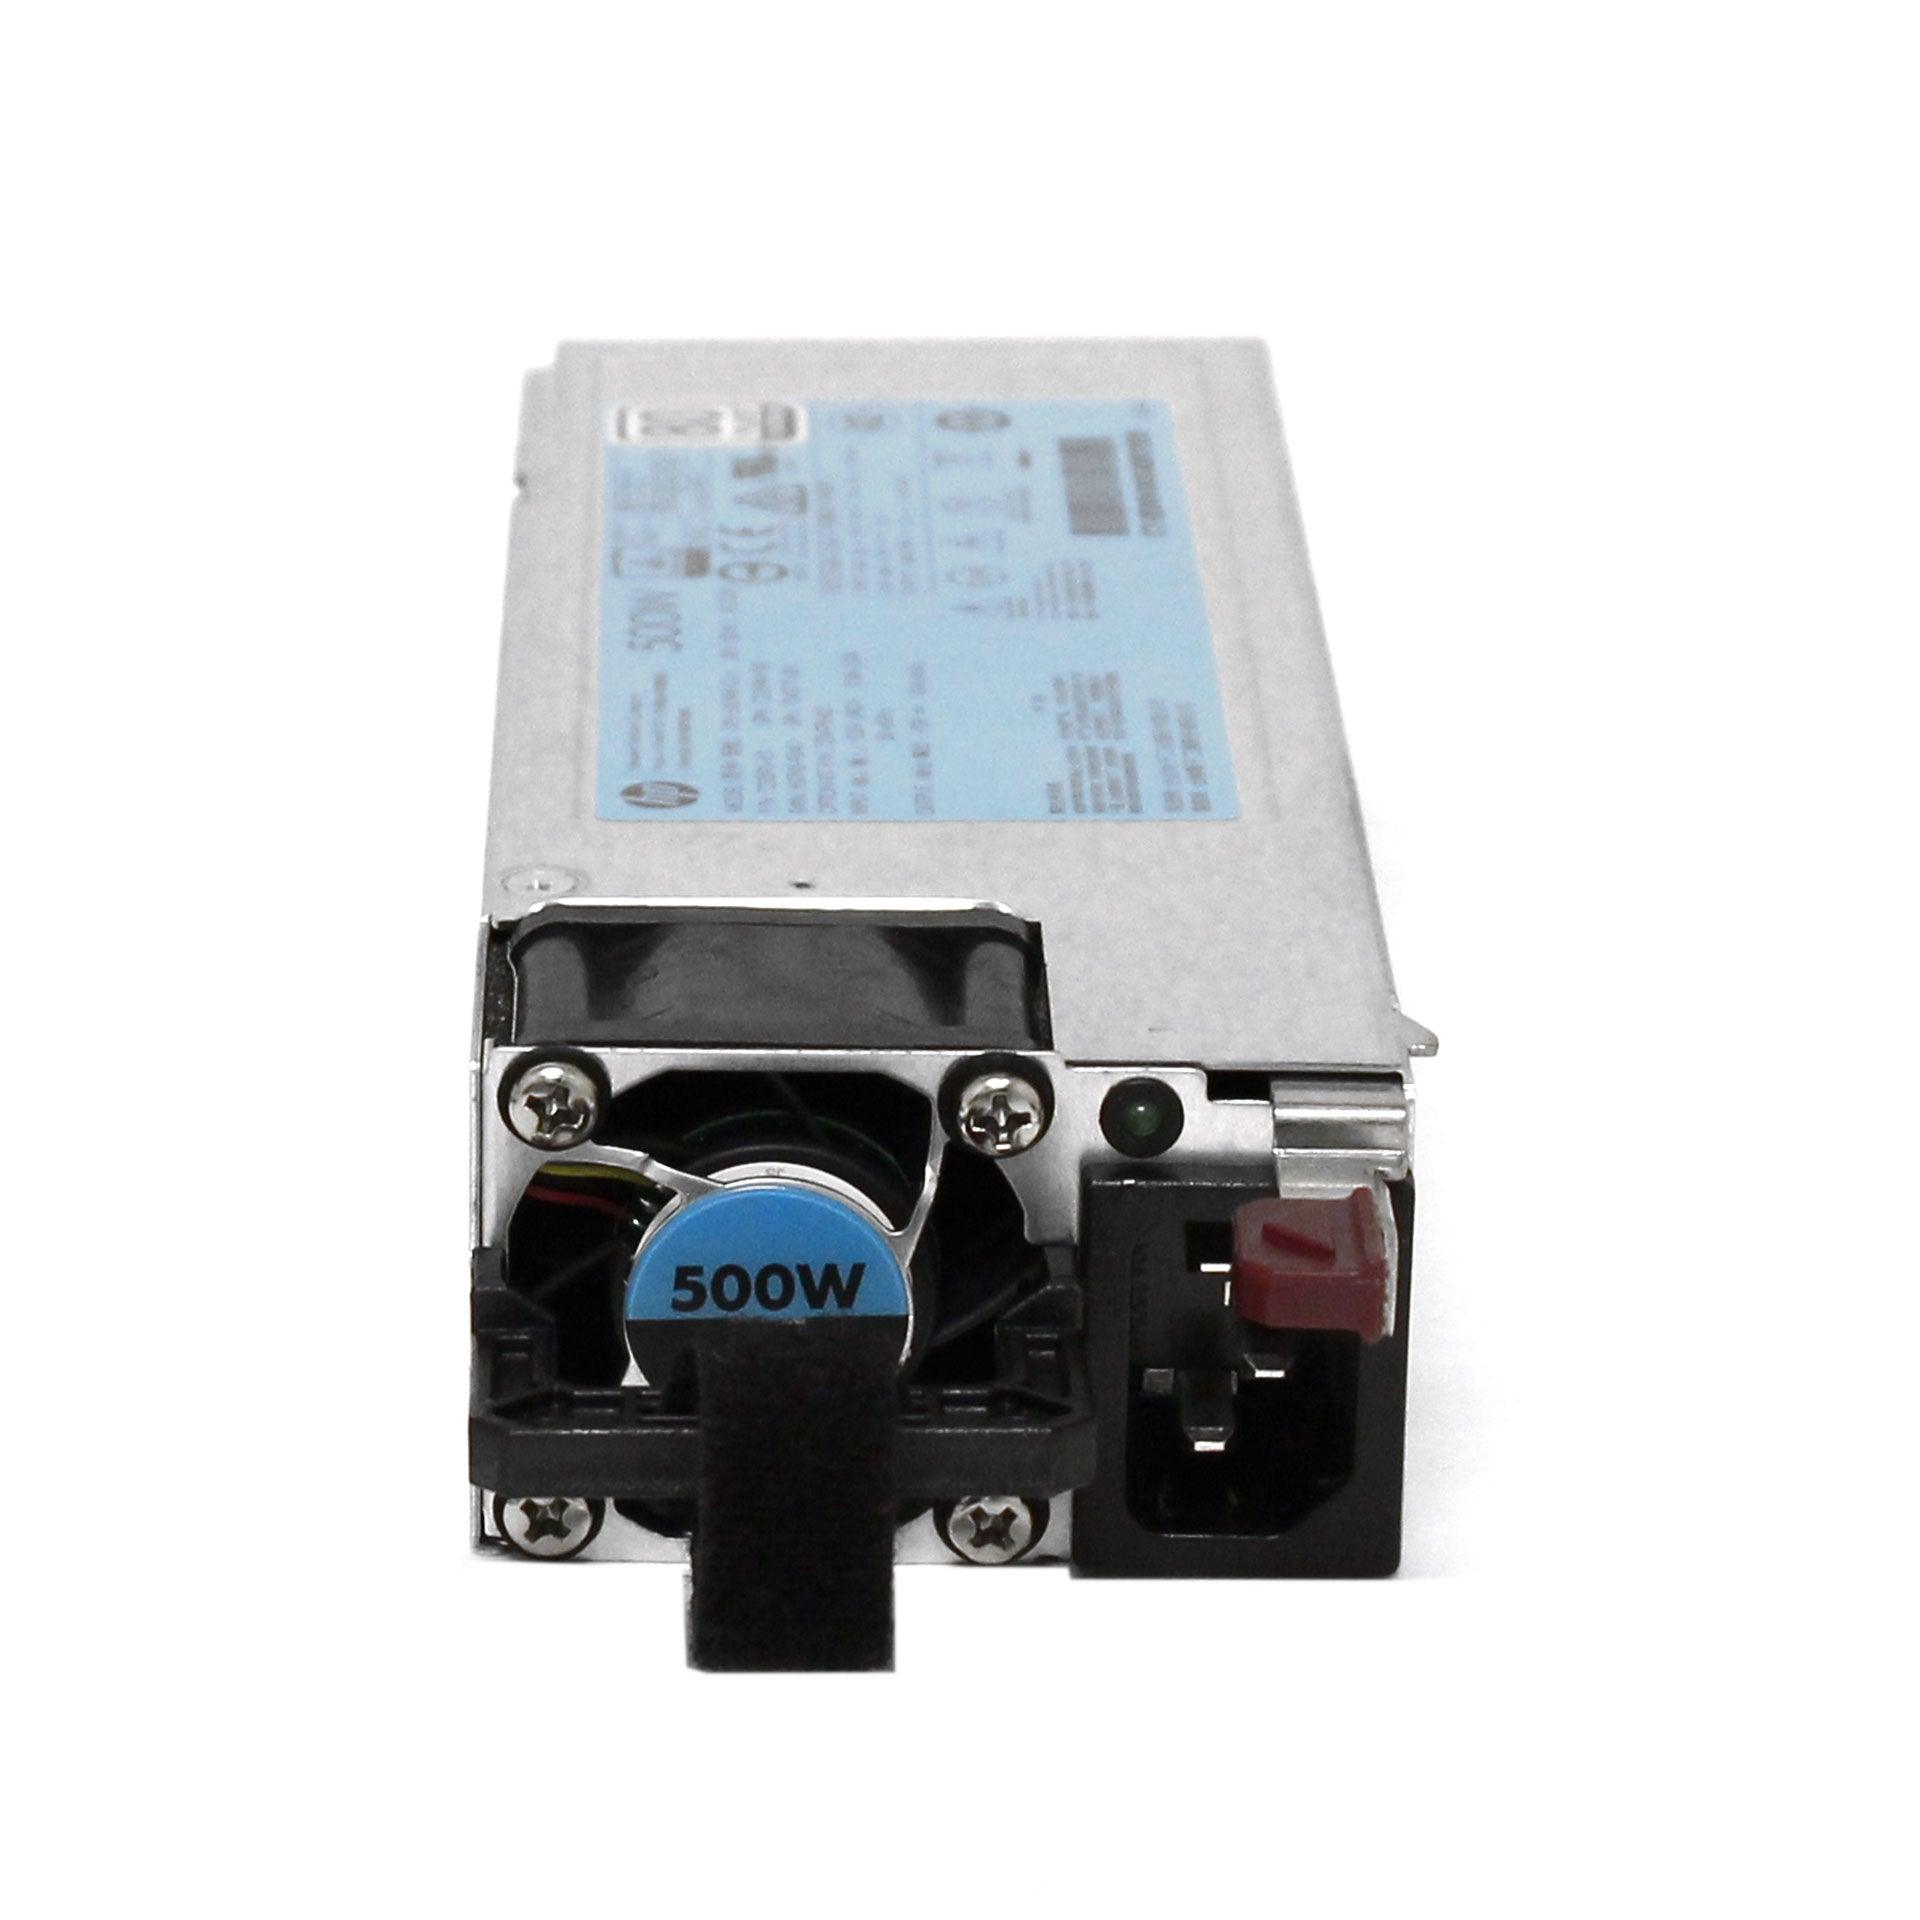 HPE 720478-B21 500W Flex Slot Platinum Hot Plug Power Supply